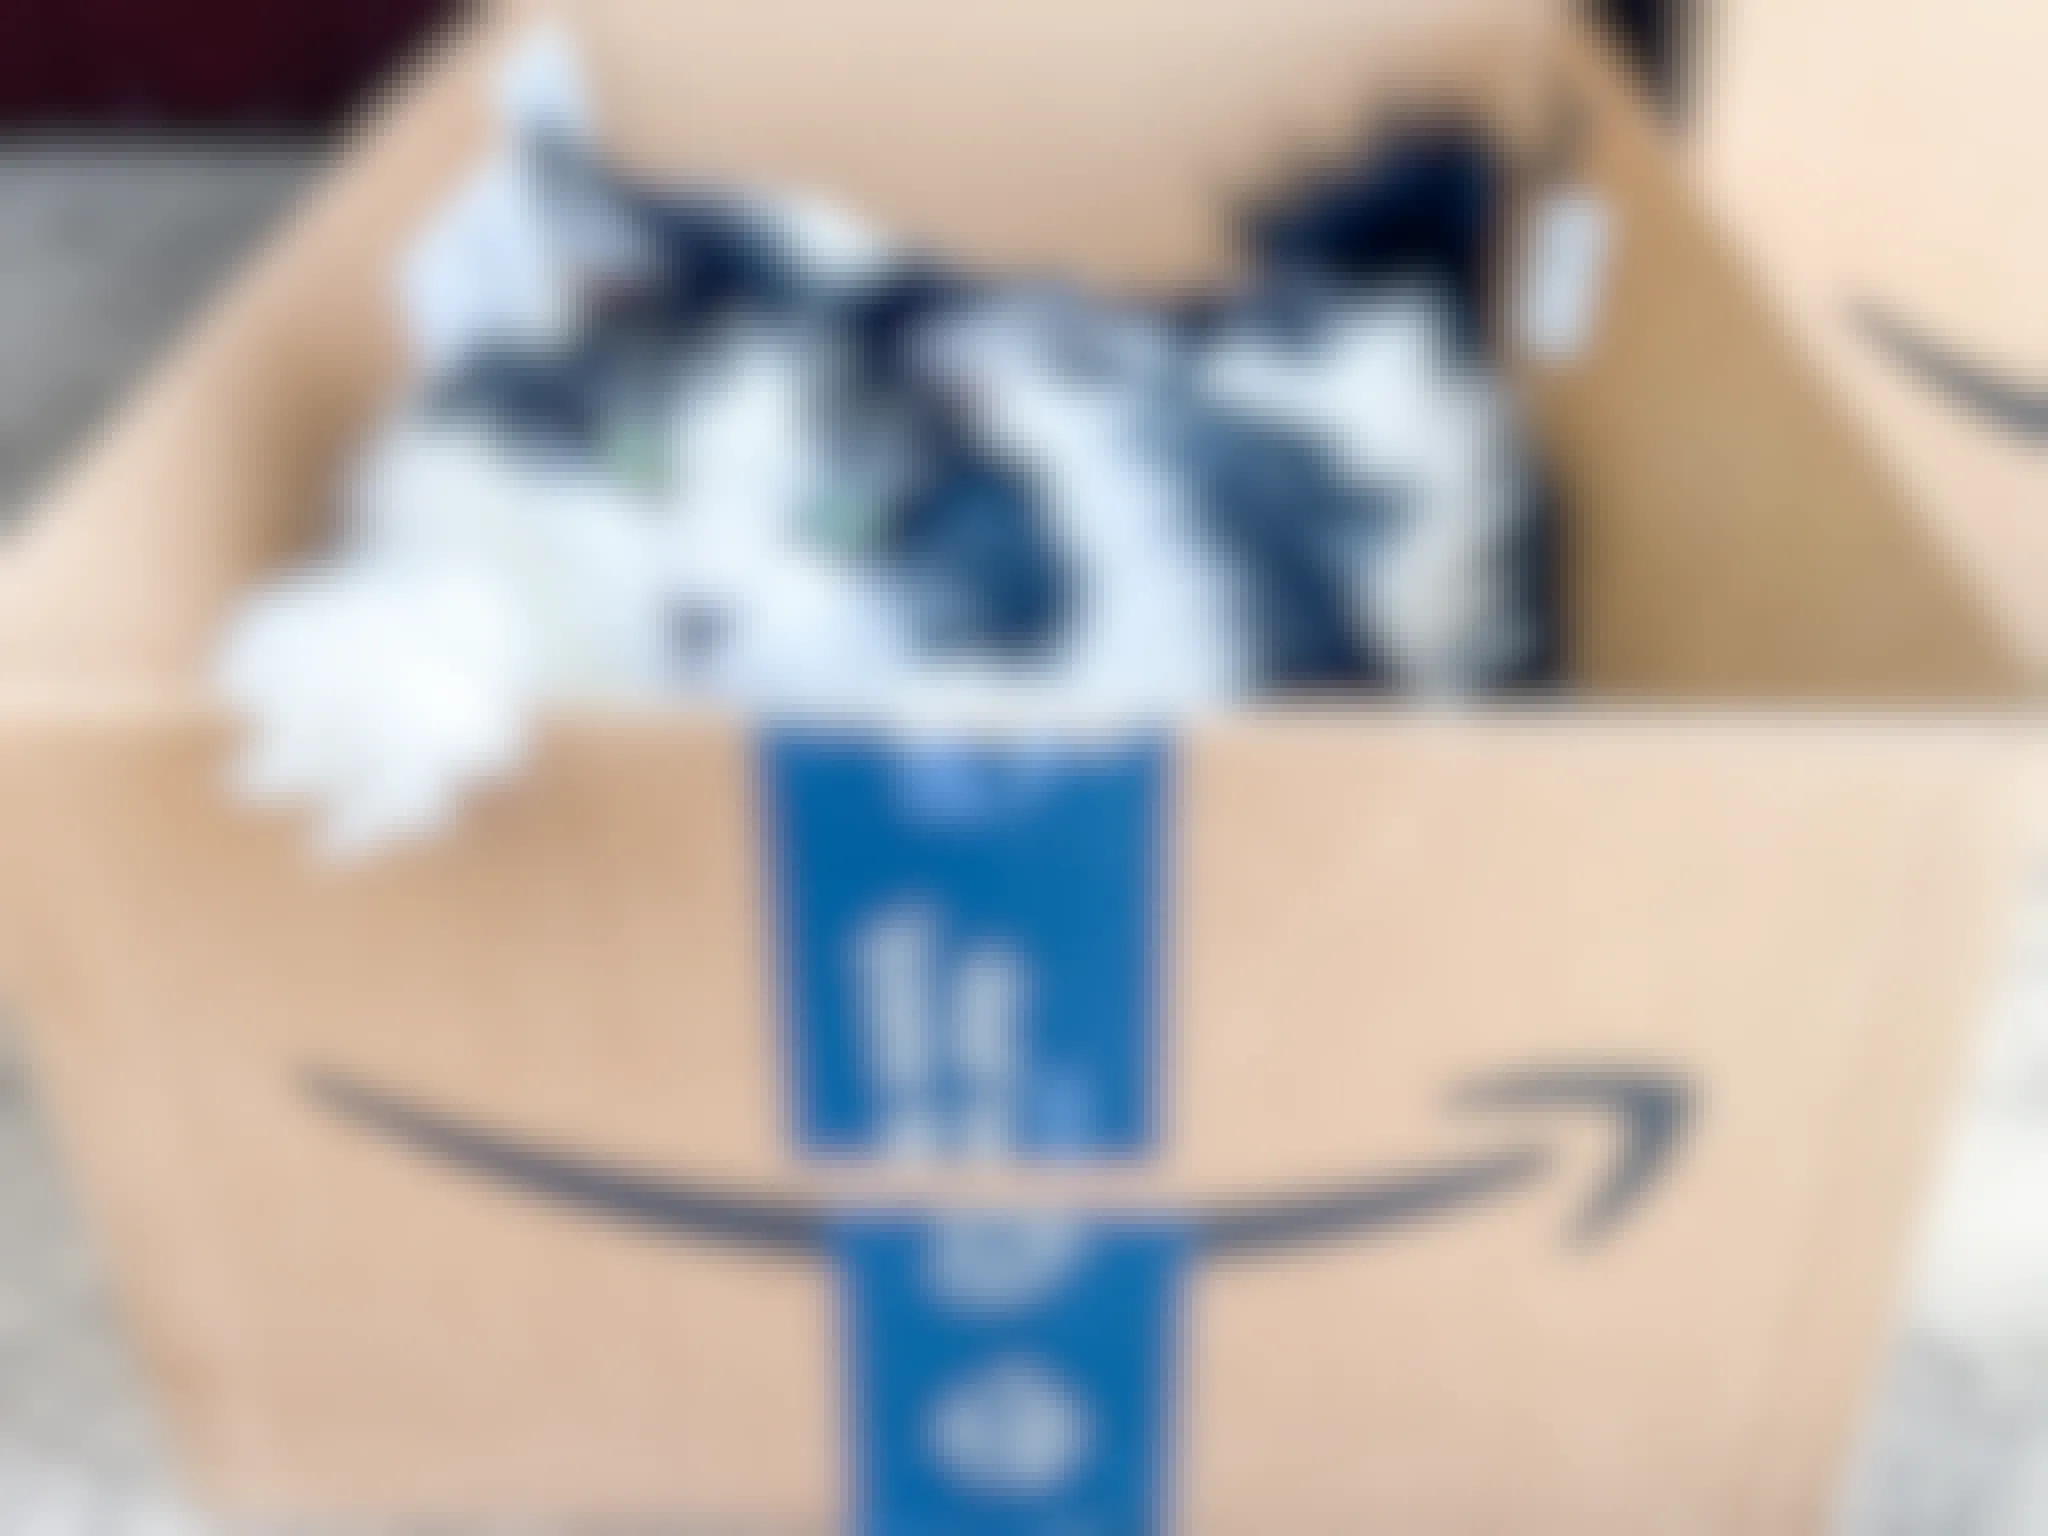 A cat sitting in an Amazon Prime cardboard box.